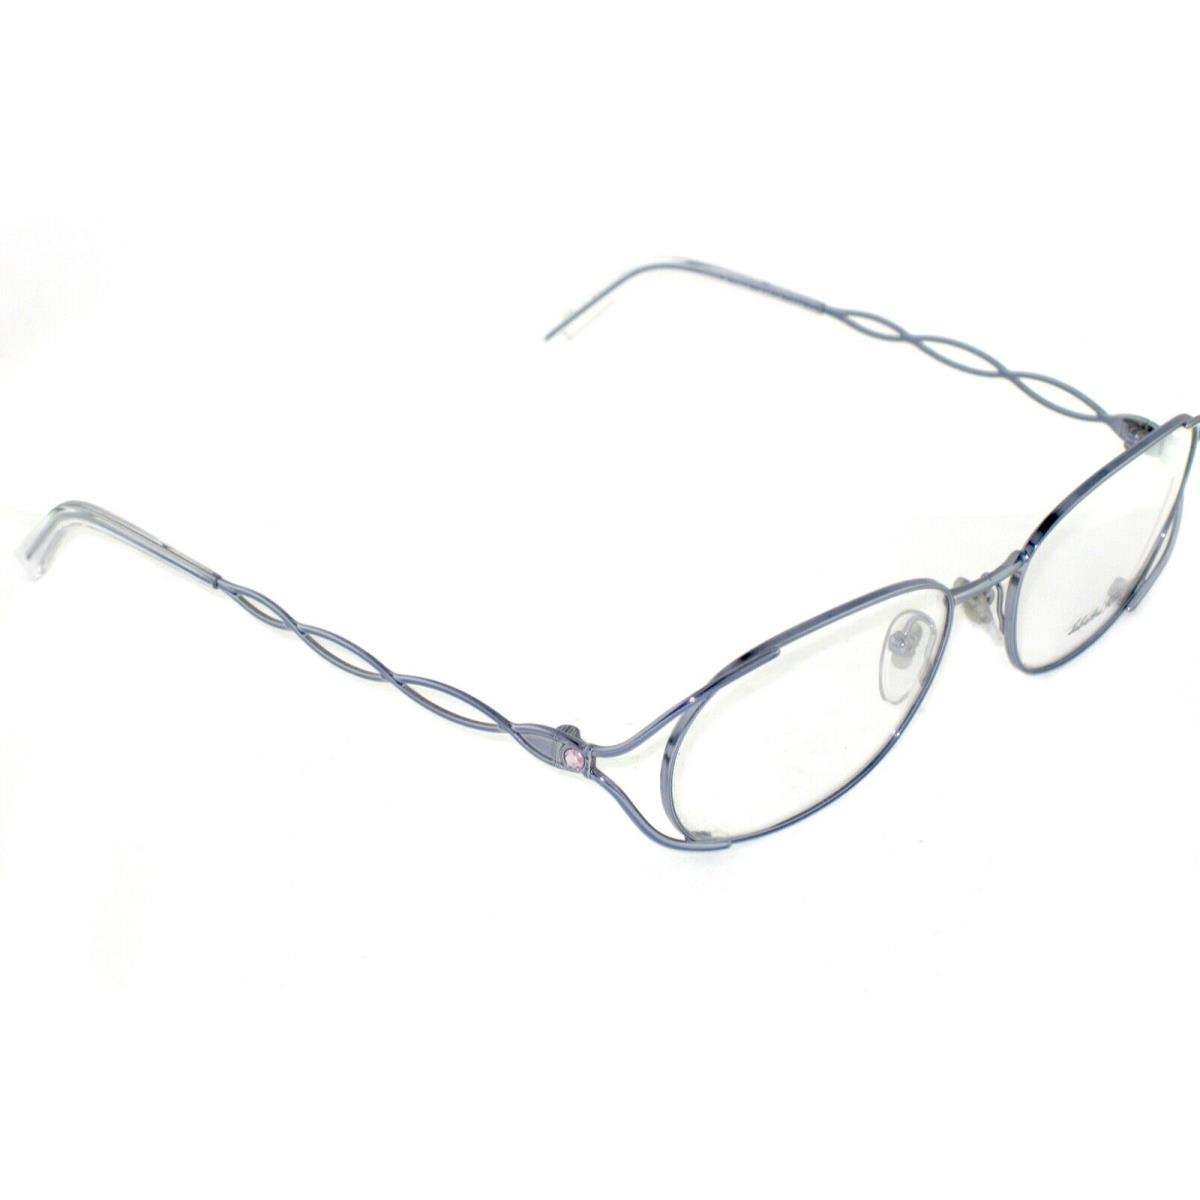 Salvatore Ferragamo Glasses Frames SF1644 710 55-17-130 Eyeglasses Optical Frame